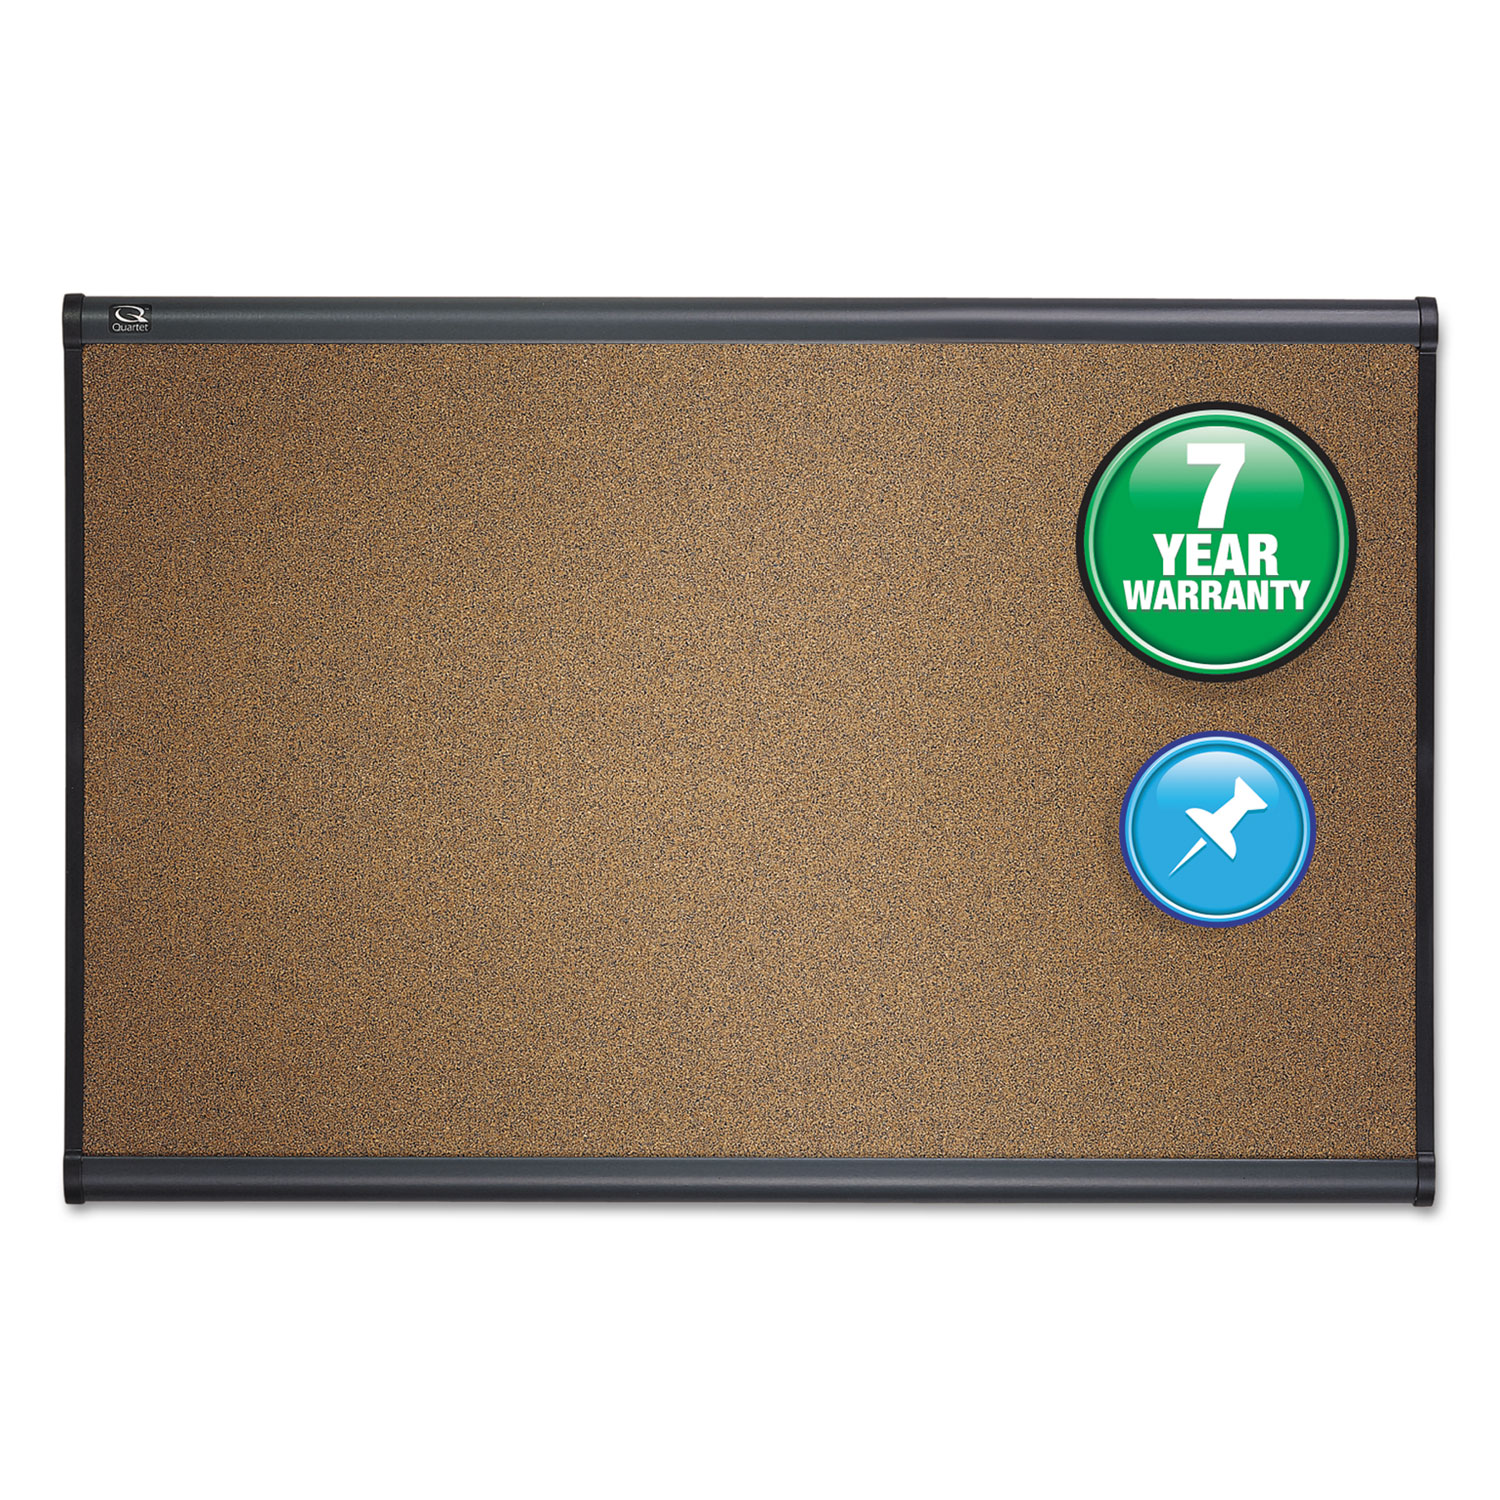  Quartet B243G Prestige Bulletin Board, Brown Graphite-Blend Surface, 36 x 24, Aluminum Frame (QRTB243G) 